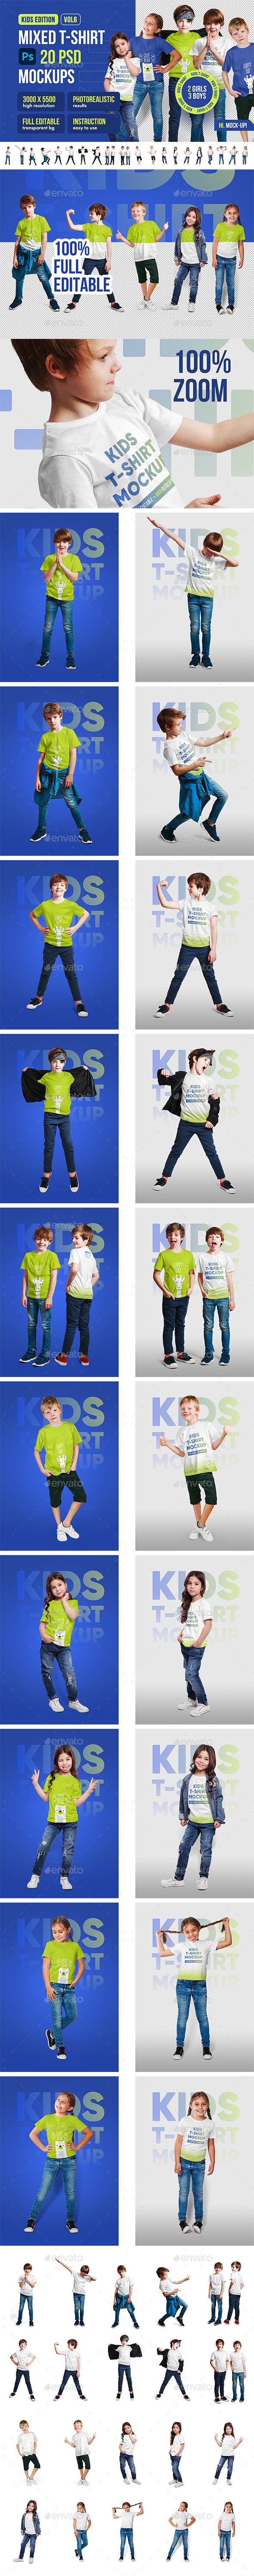 Mixed Kids T-Shirt 20 PSD Mockups Vol 6